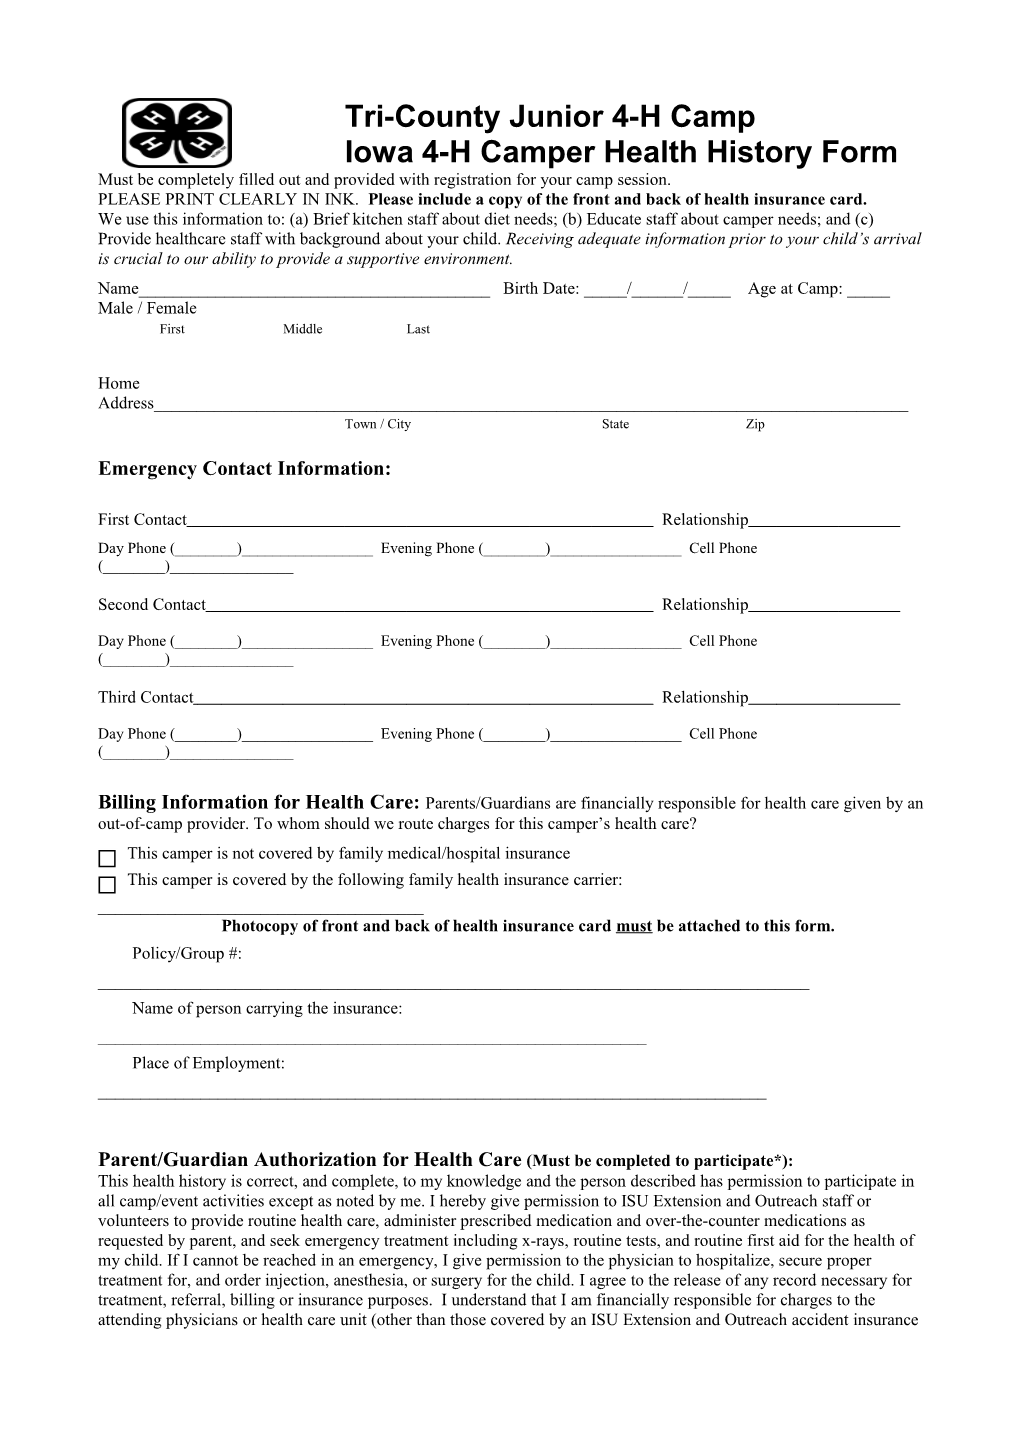 Iowa 4-H Camper Health History Form